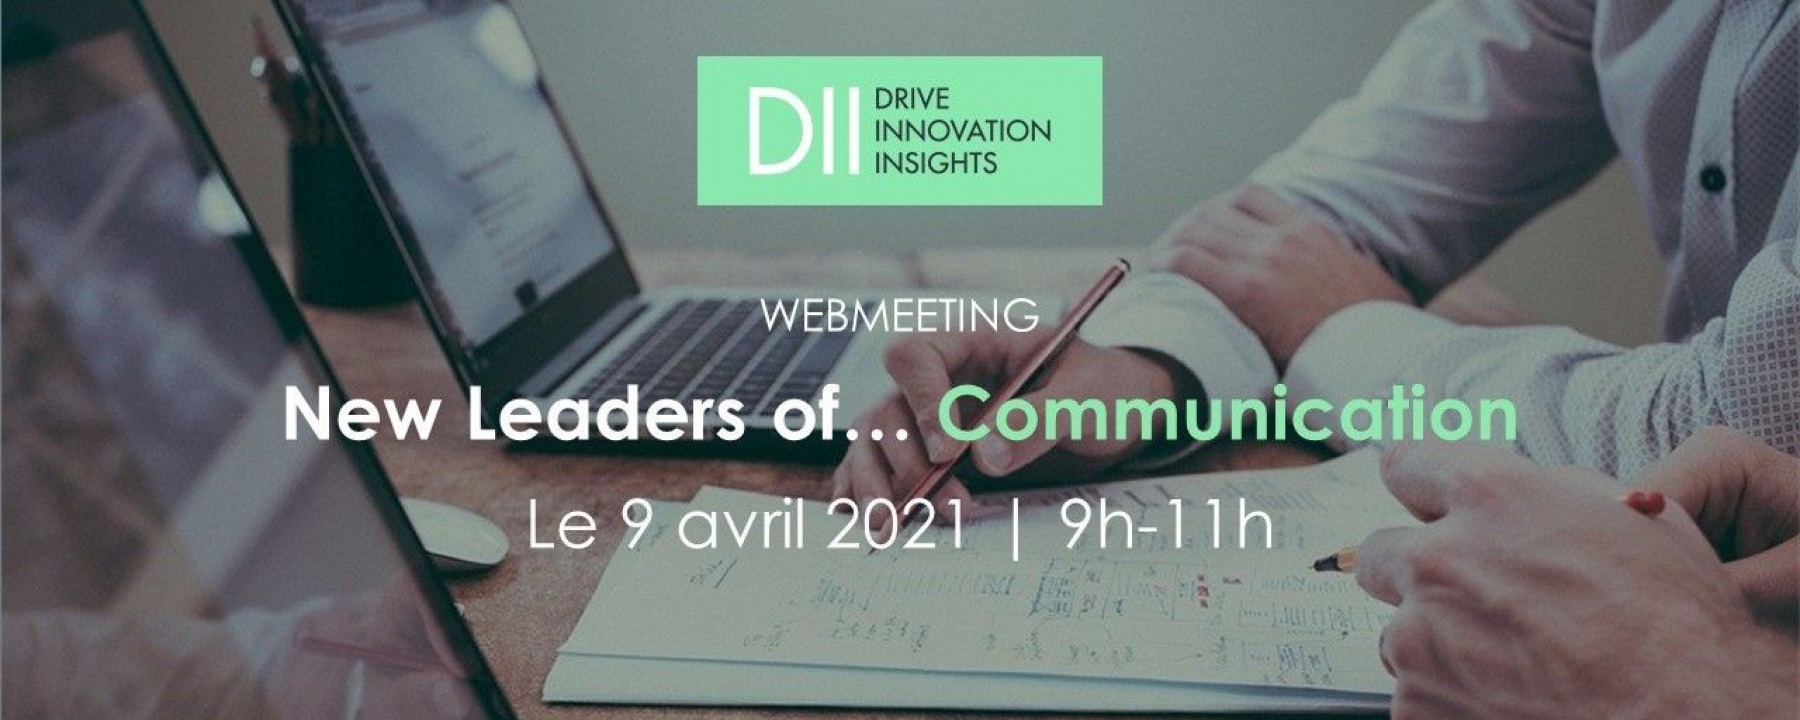 New leaders of communication, organisé par DII le 9 avril 2021